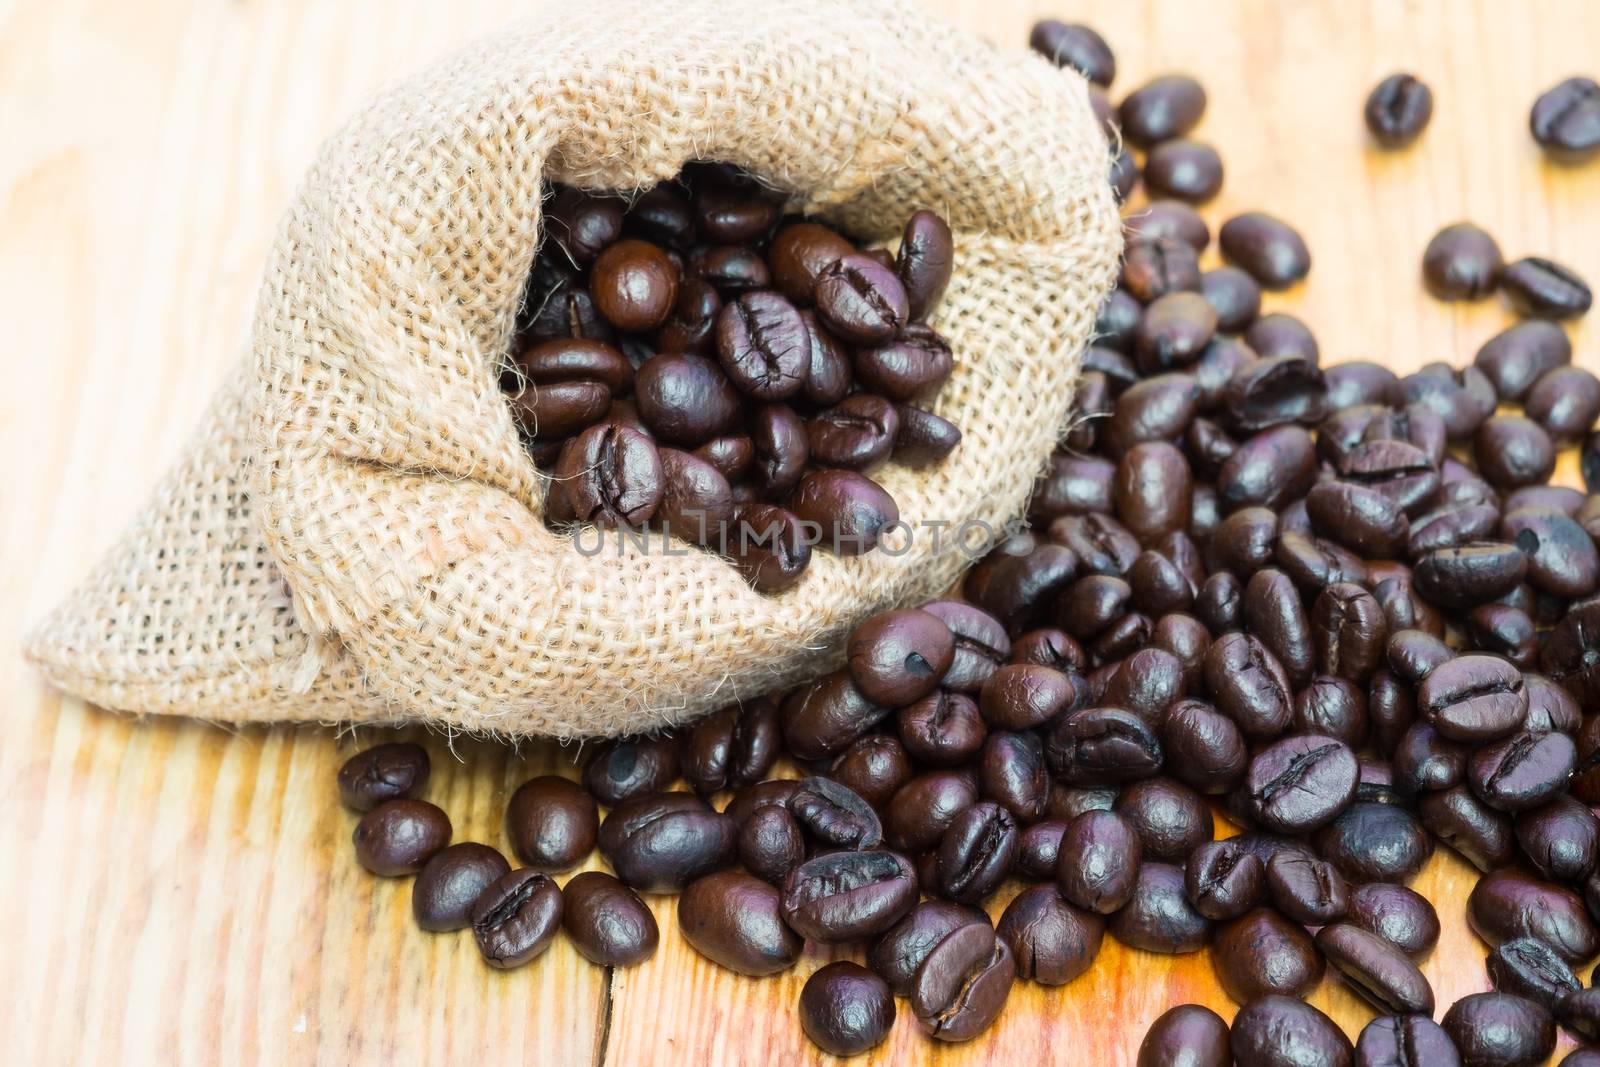 Coffee beans in burlap sack.